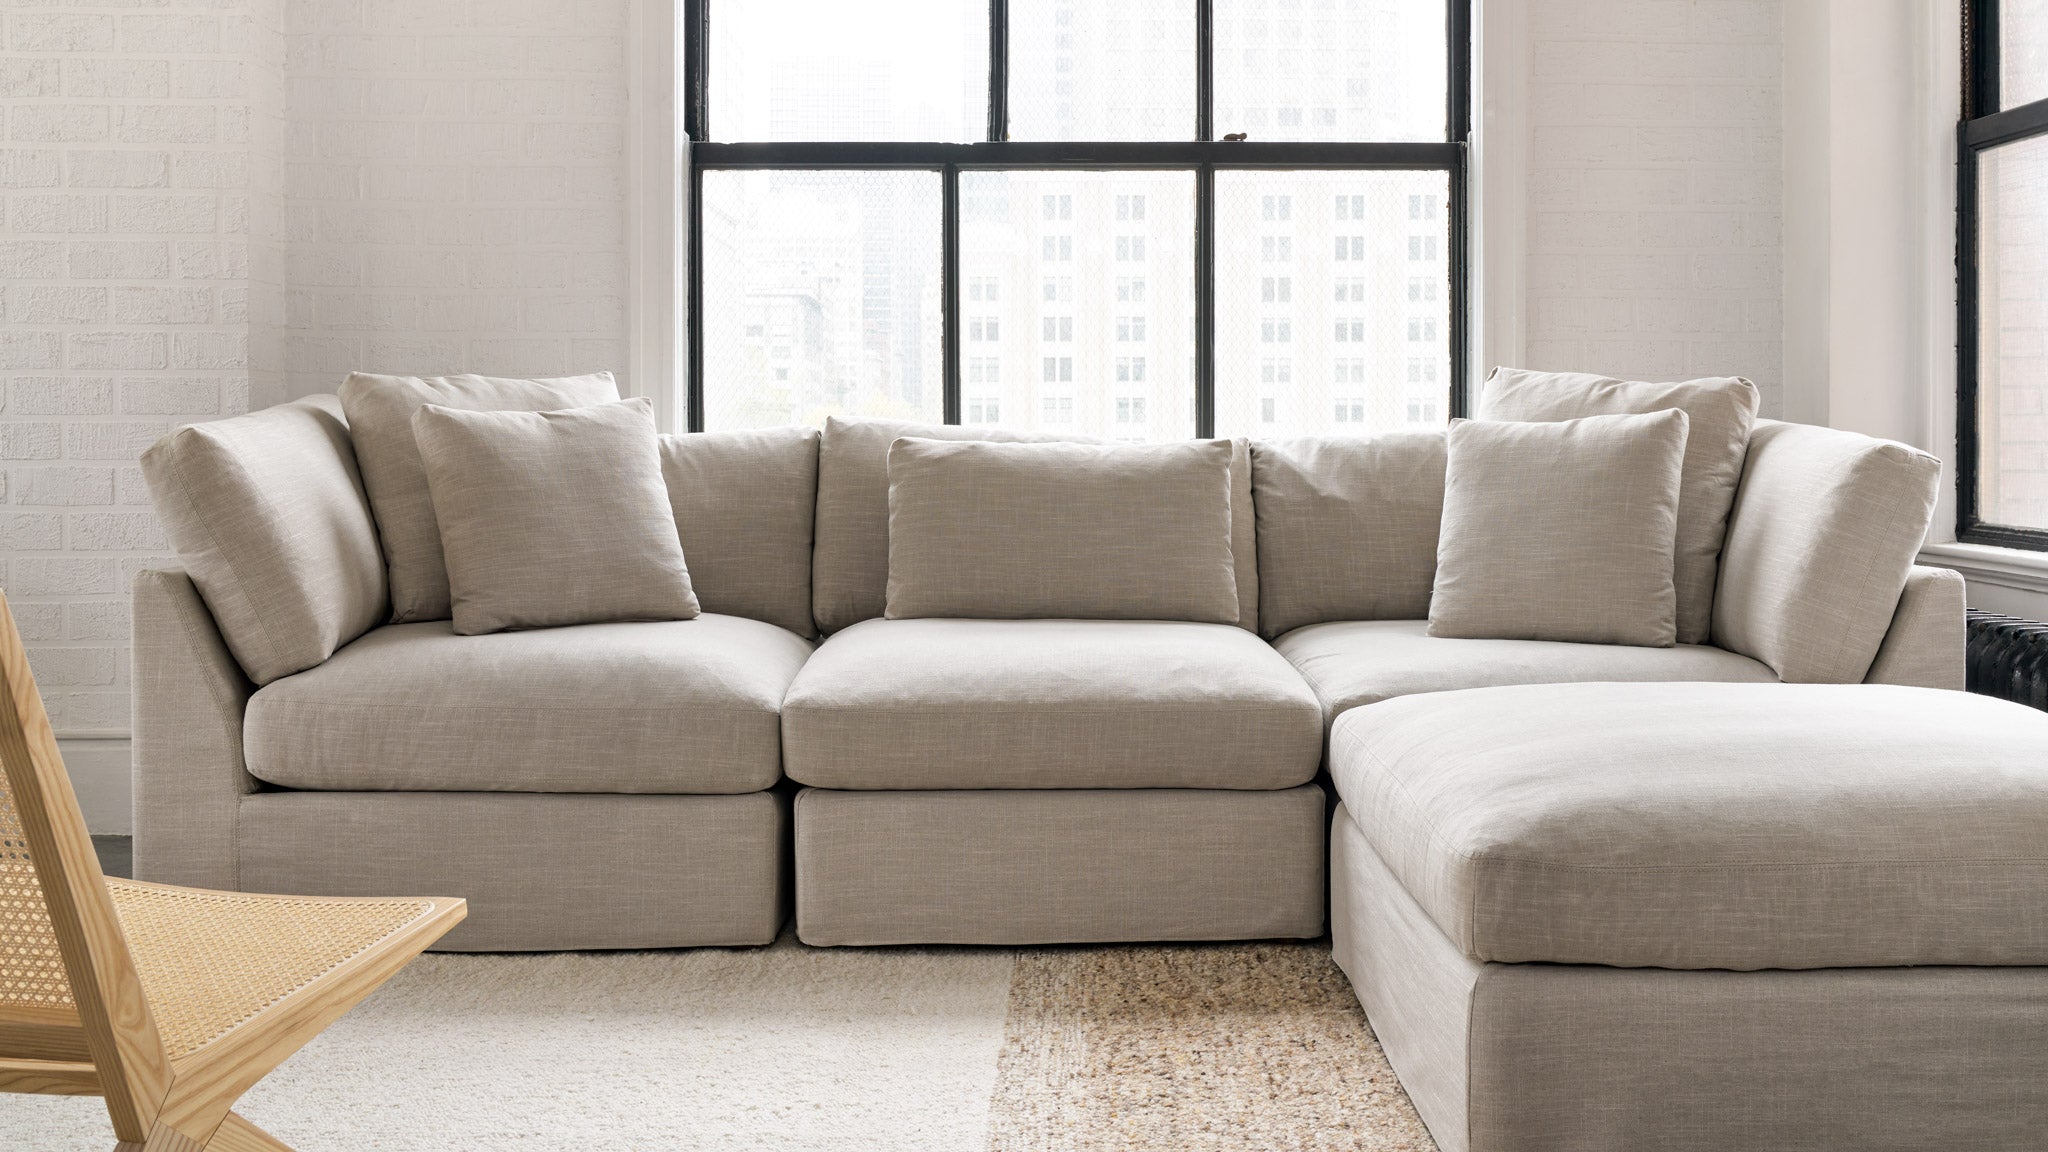 Get Together™ 3-Piece Modular Sofa, Large, Light Pebble - Image 7